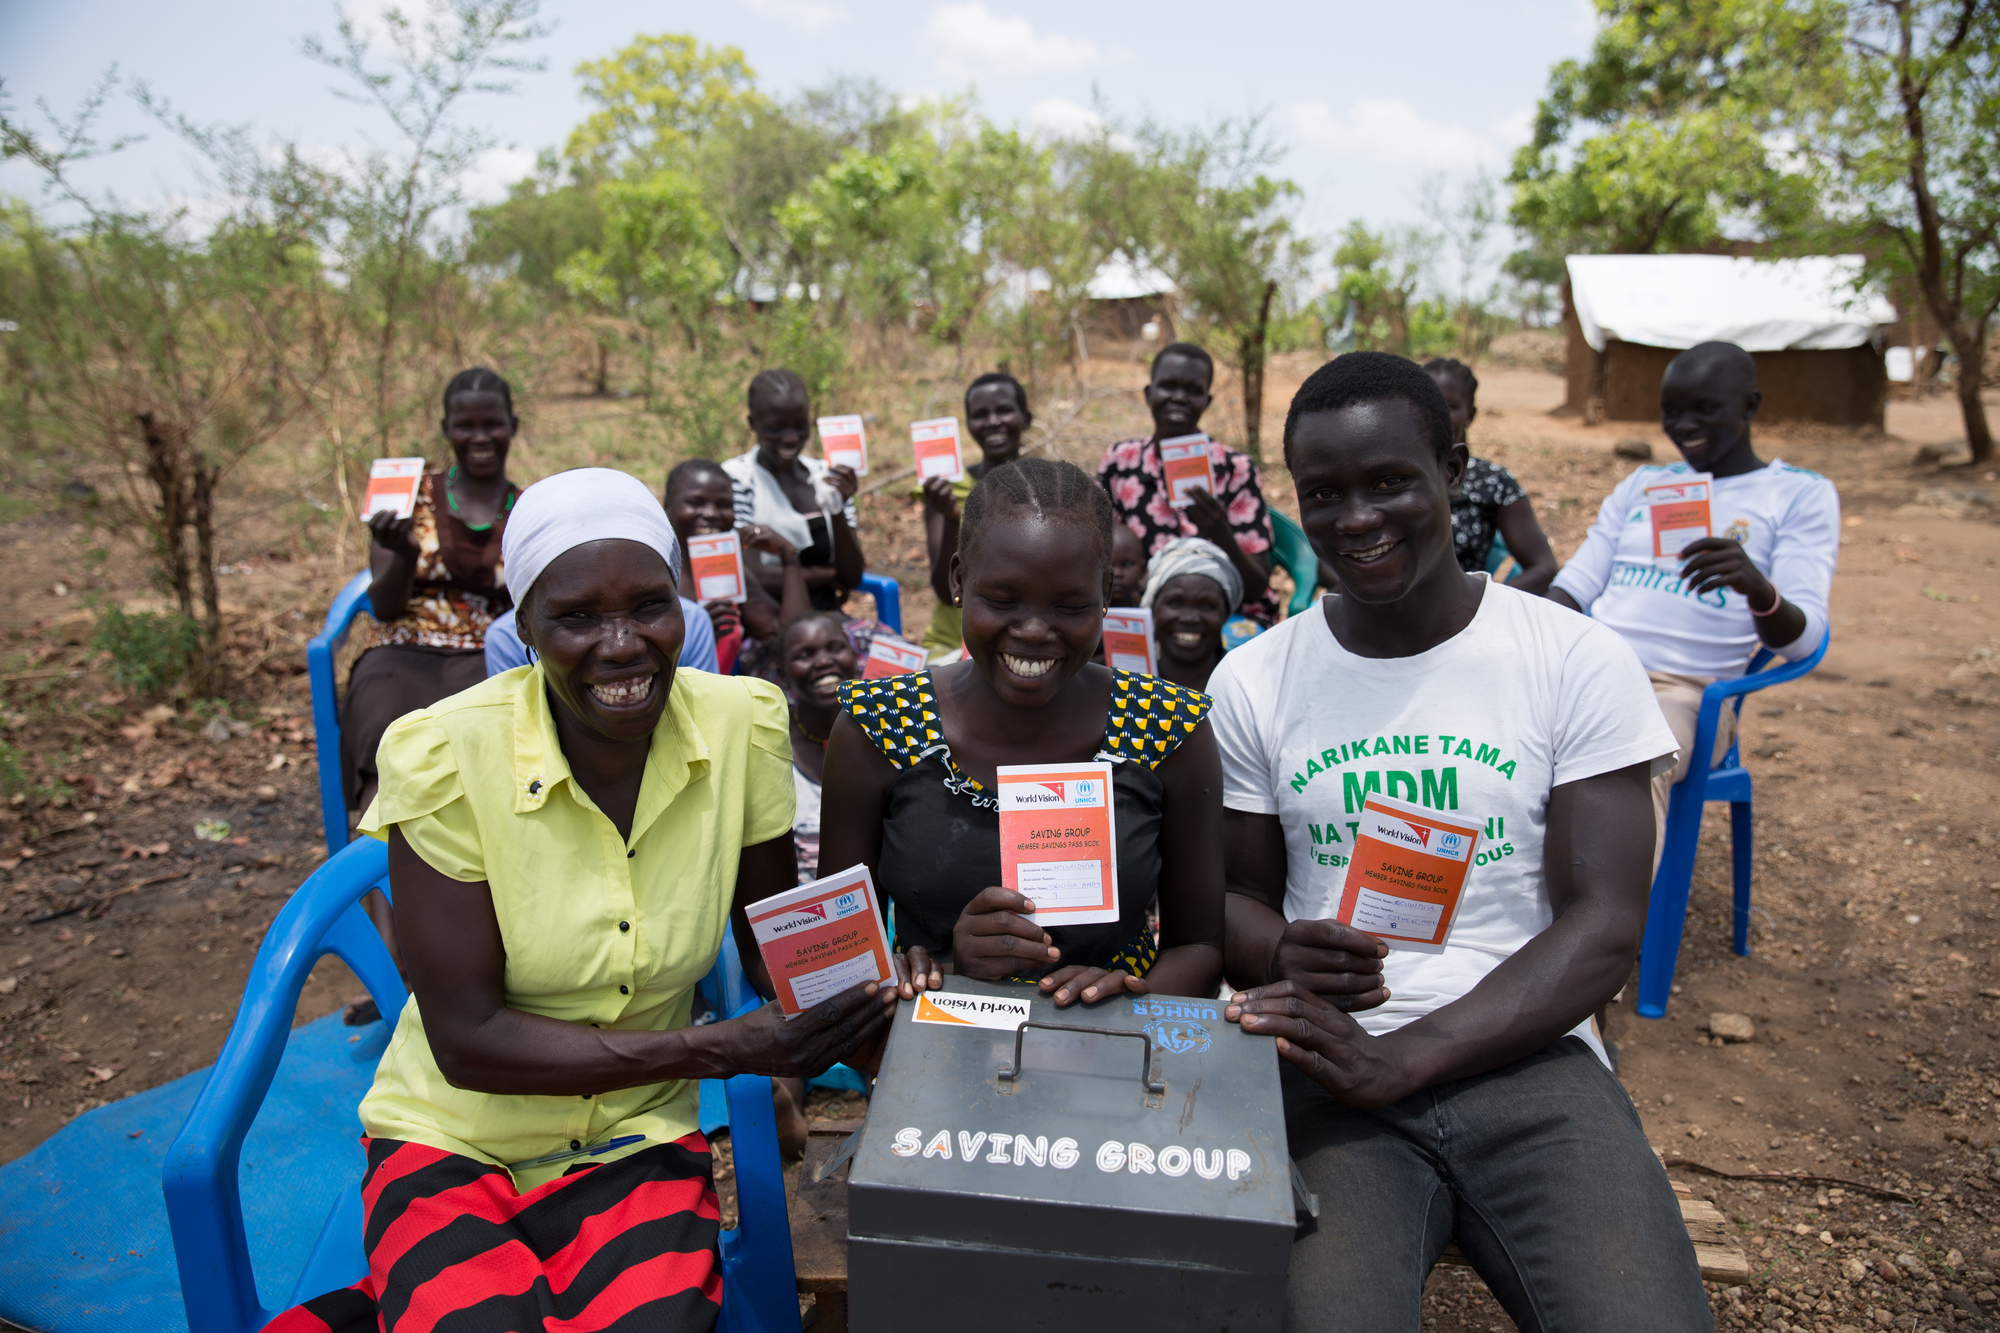 Savings group participants in Uganda